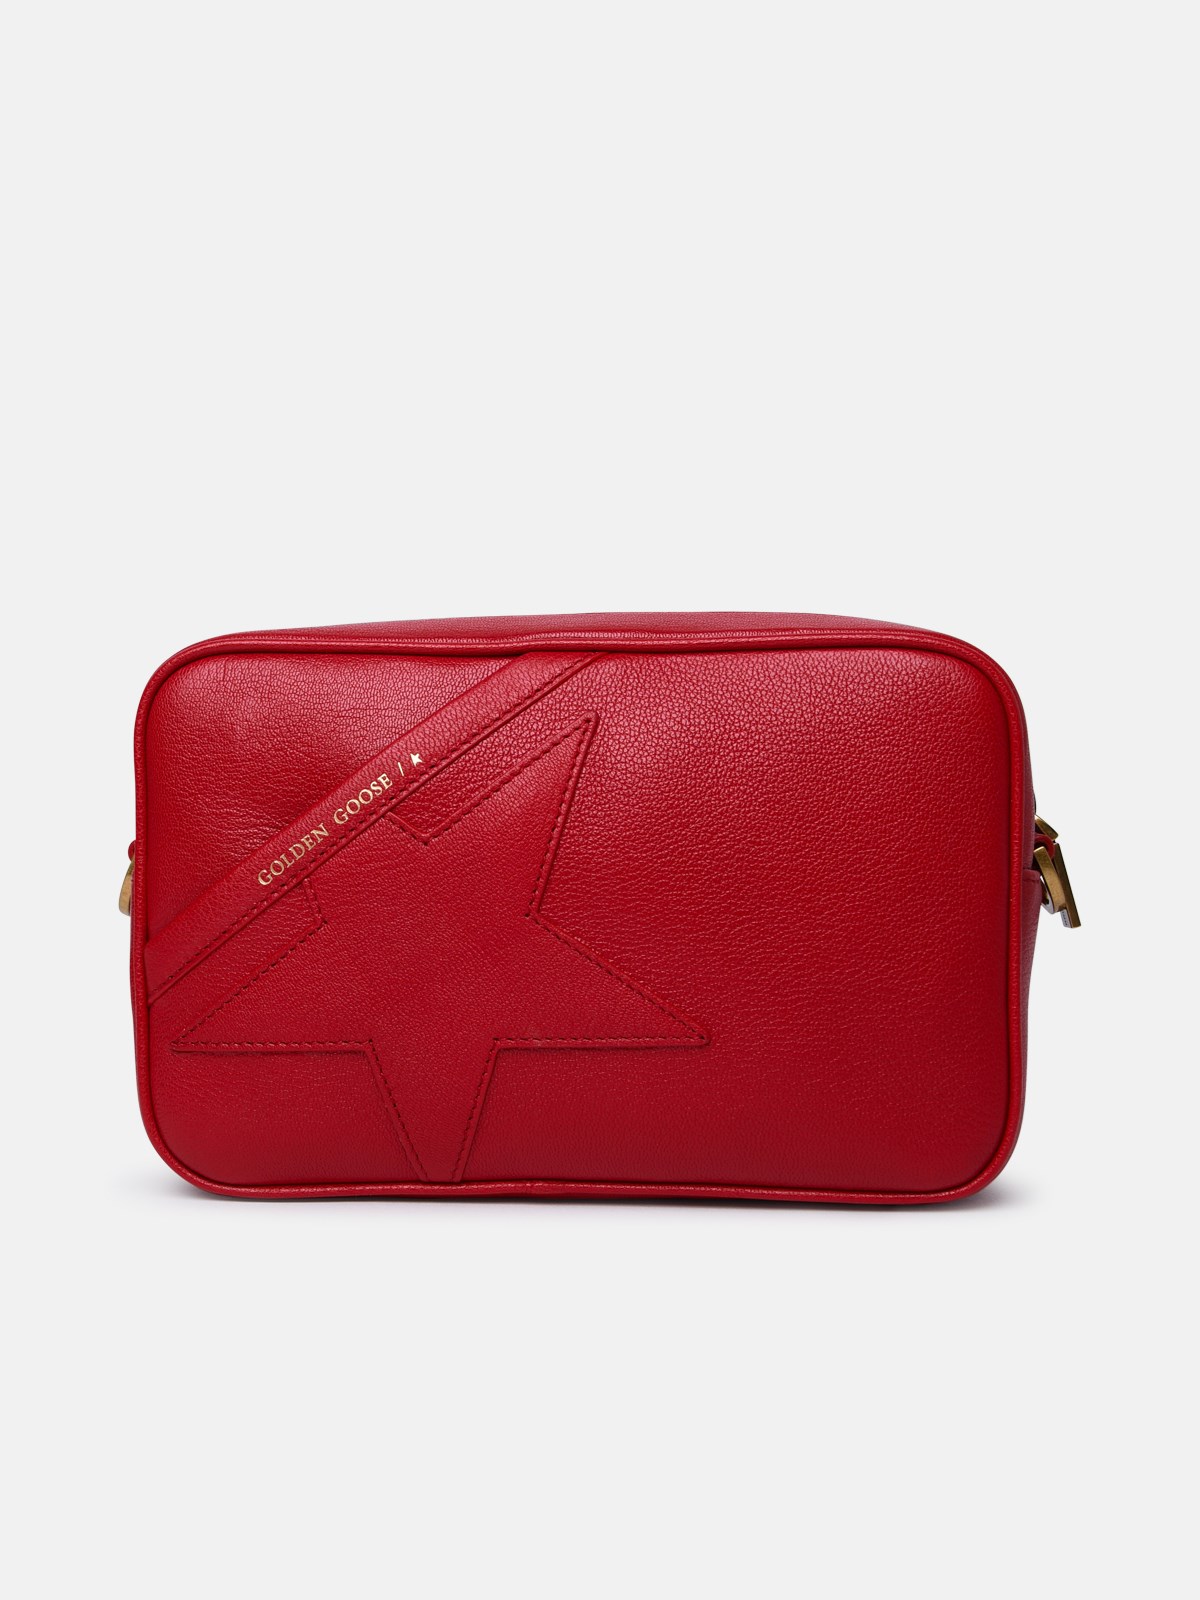 Golden Goose Red Leather Bag